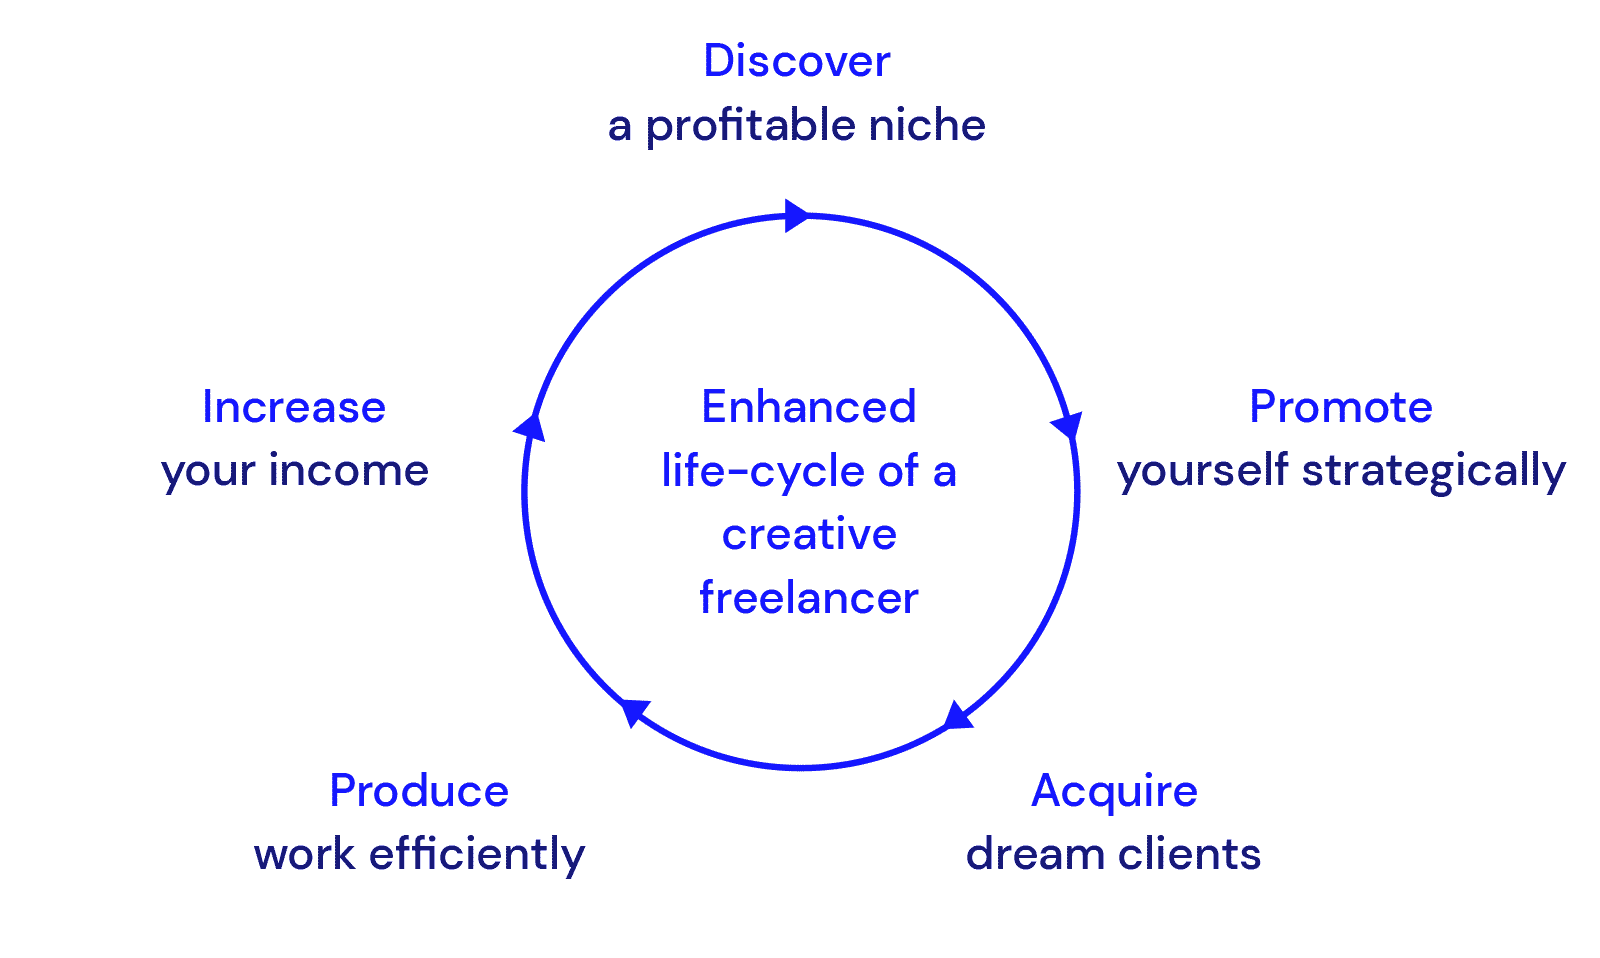 Enhanced life-cycle of a creative freelancer